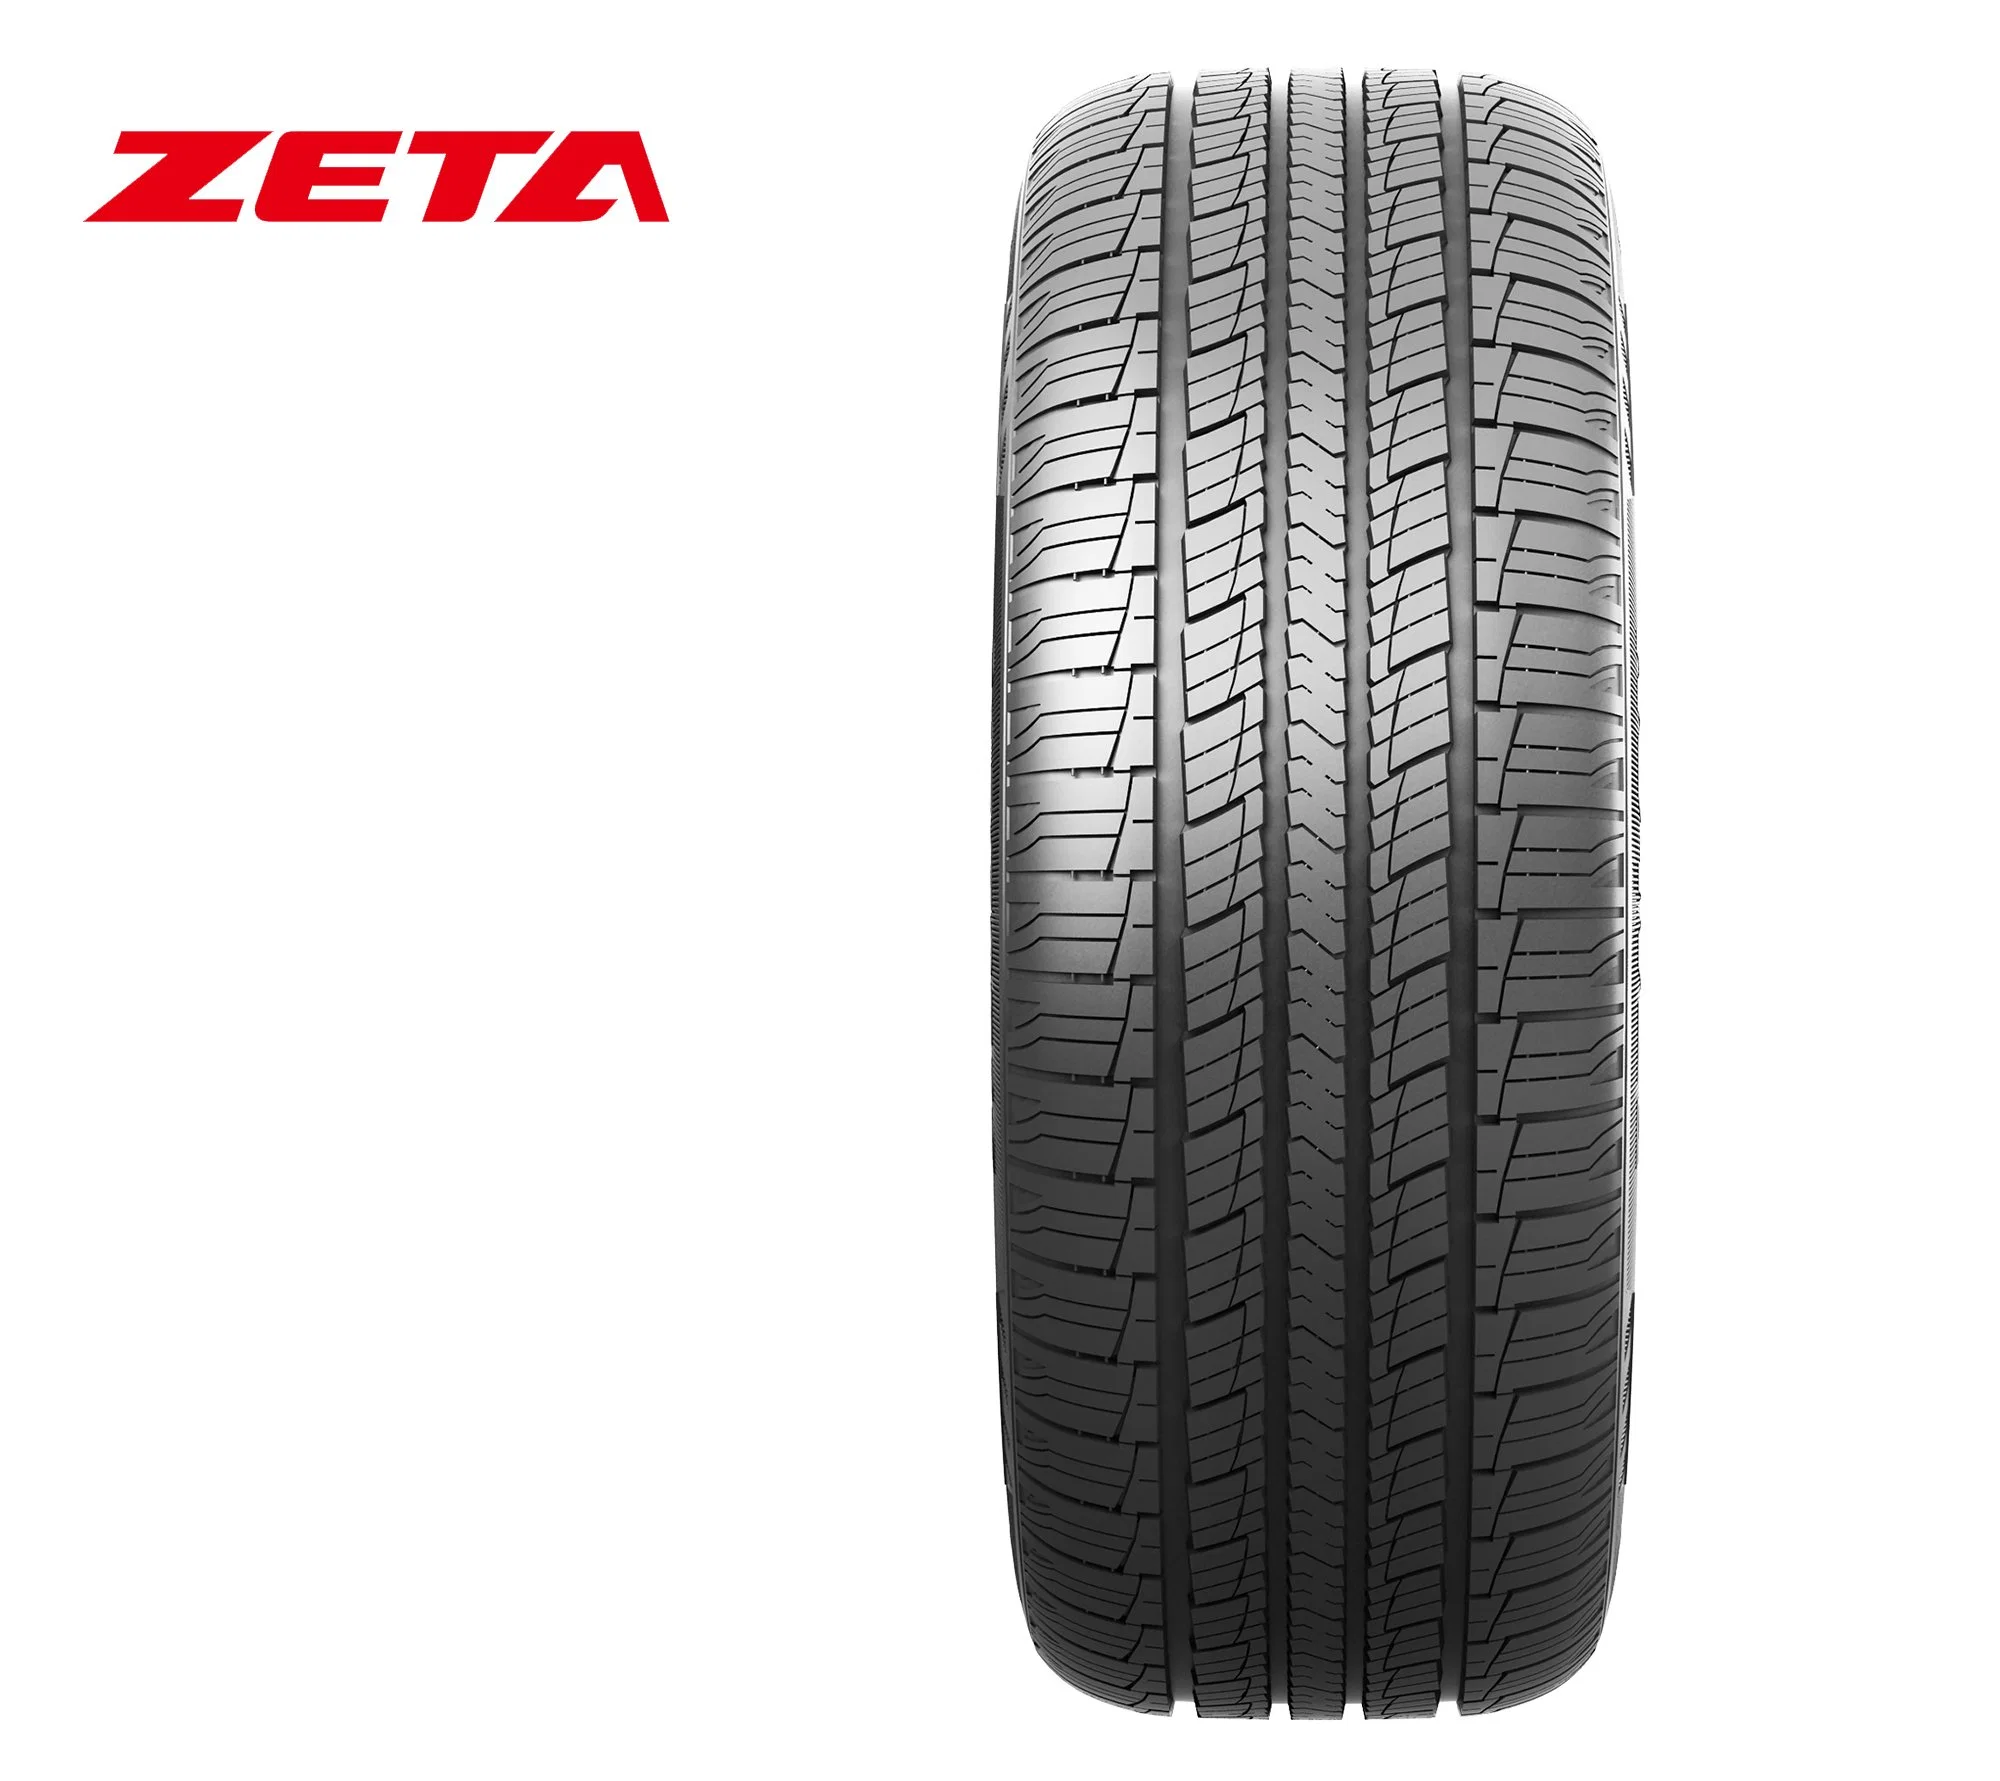 Zeta Thai Natural Rubber Passenger Car Tyres for Wholesale